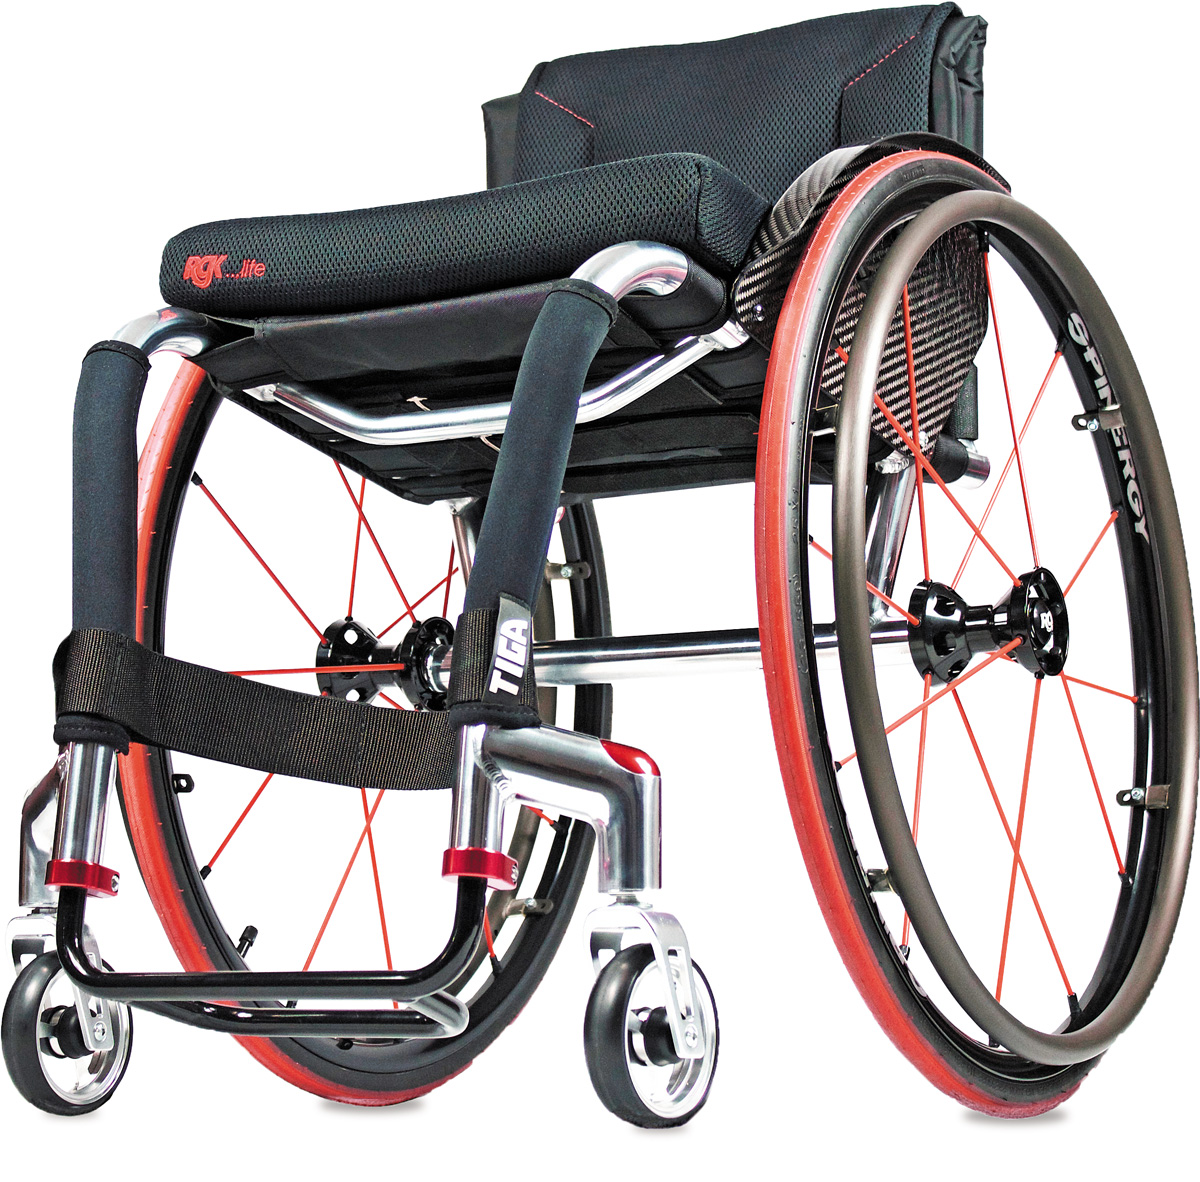 RGK TIGA Lightweight wheelchair